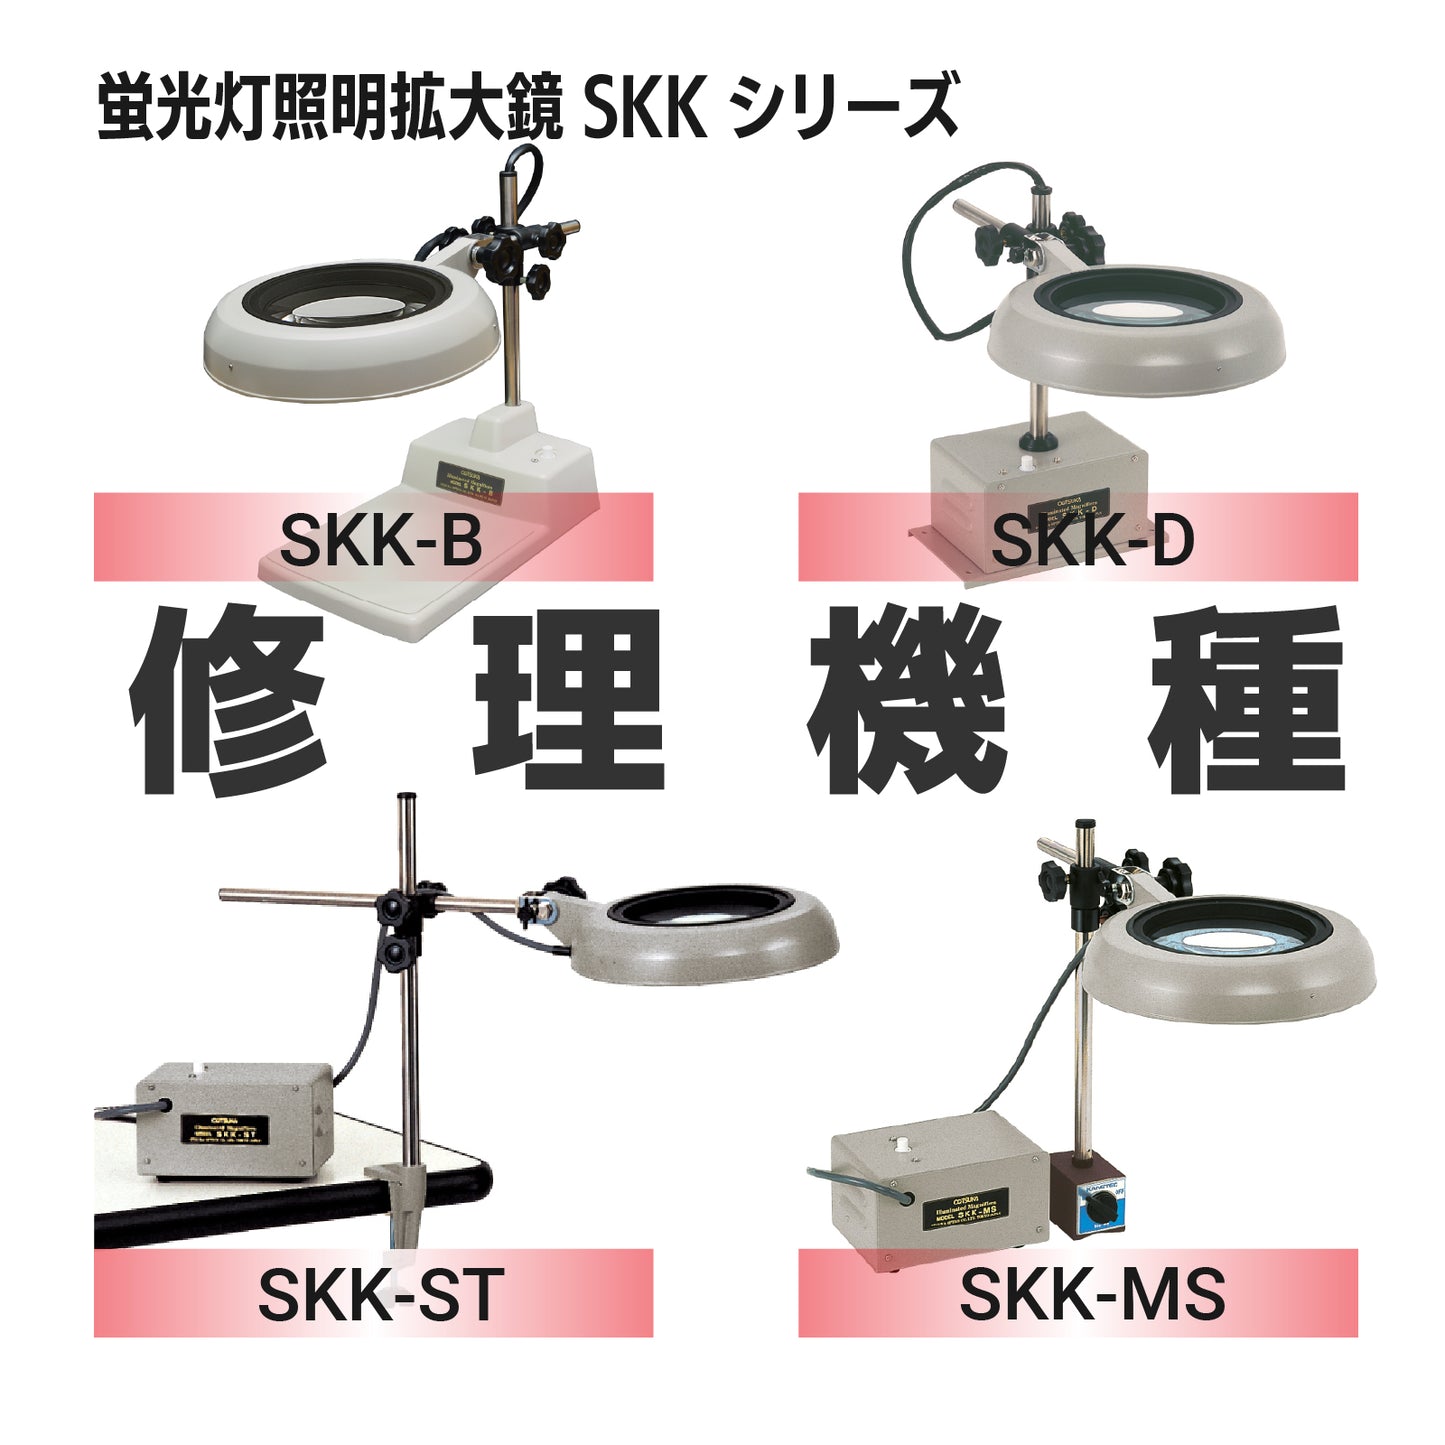 SKK series: SKK-B, D, ST, MS types